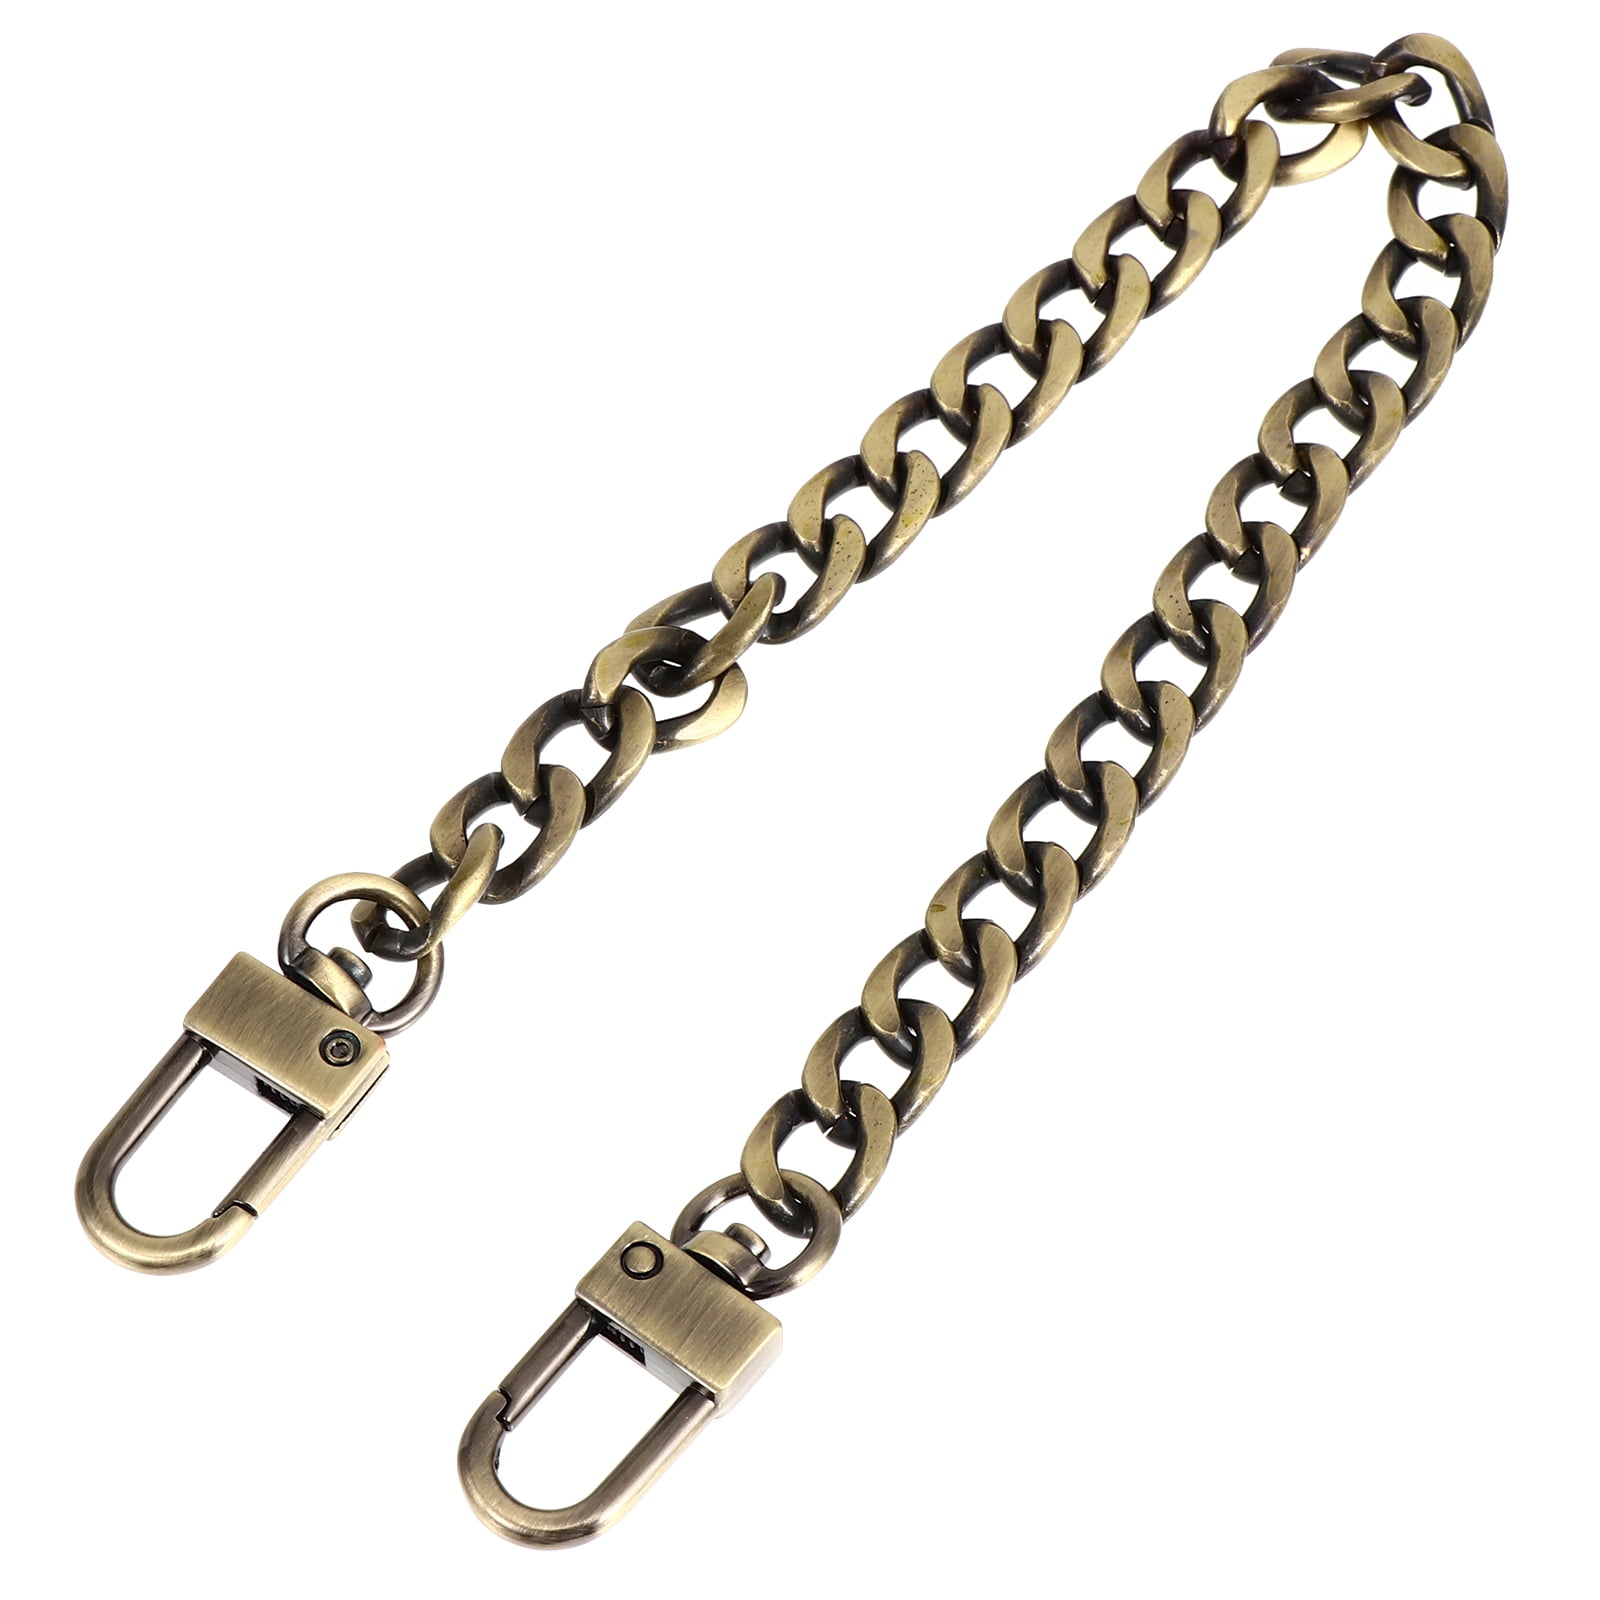 OUNONA 1pc Alloy Chain Purse Strap Cross Body Bag Chain Replacement  Accessories 